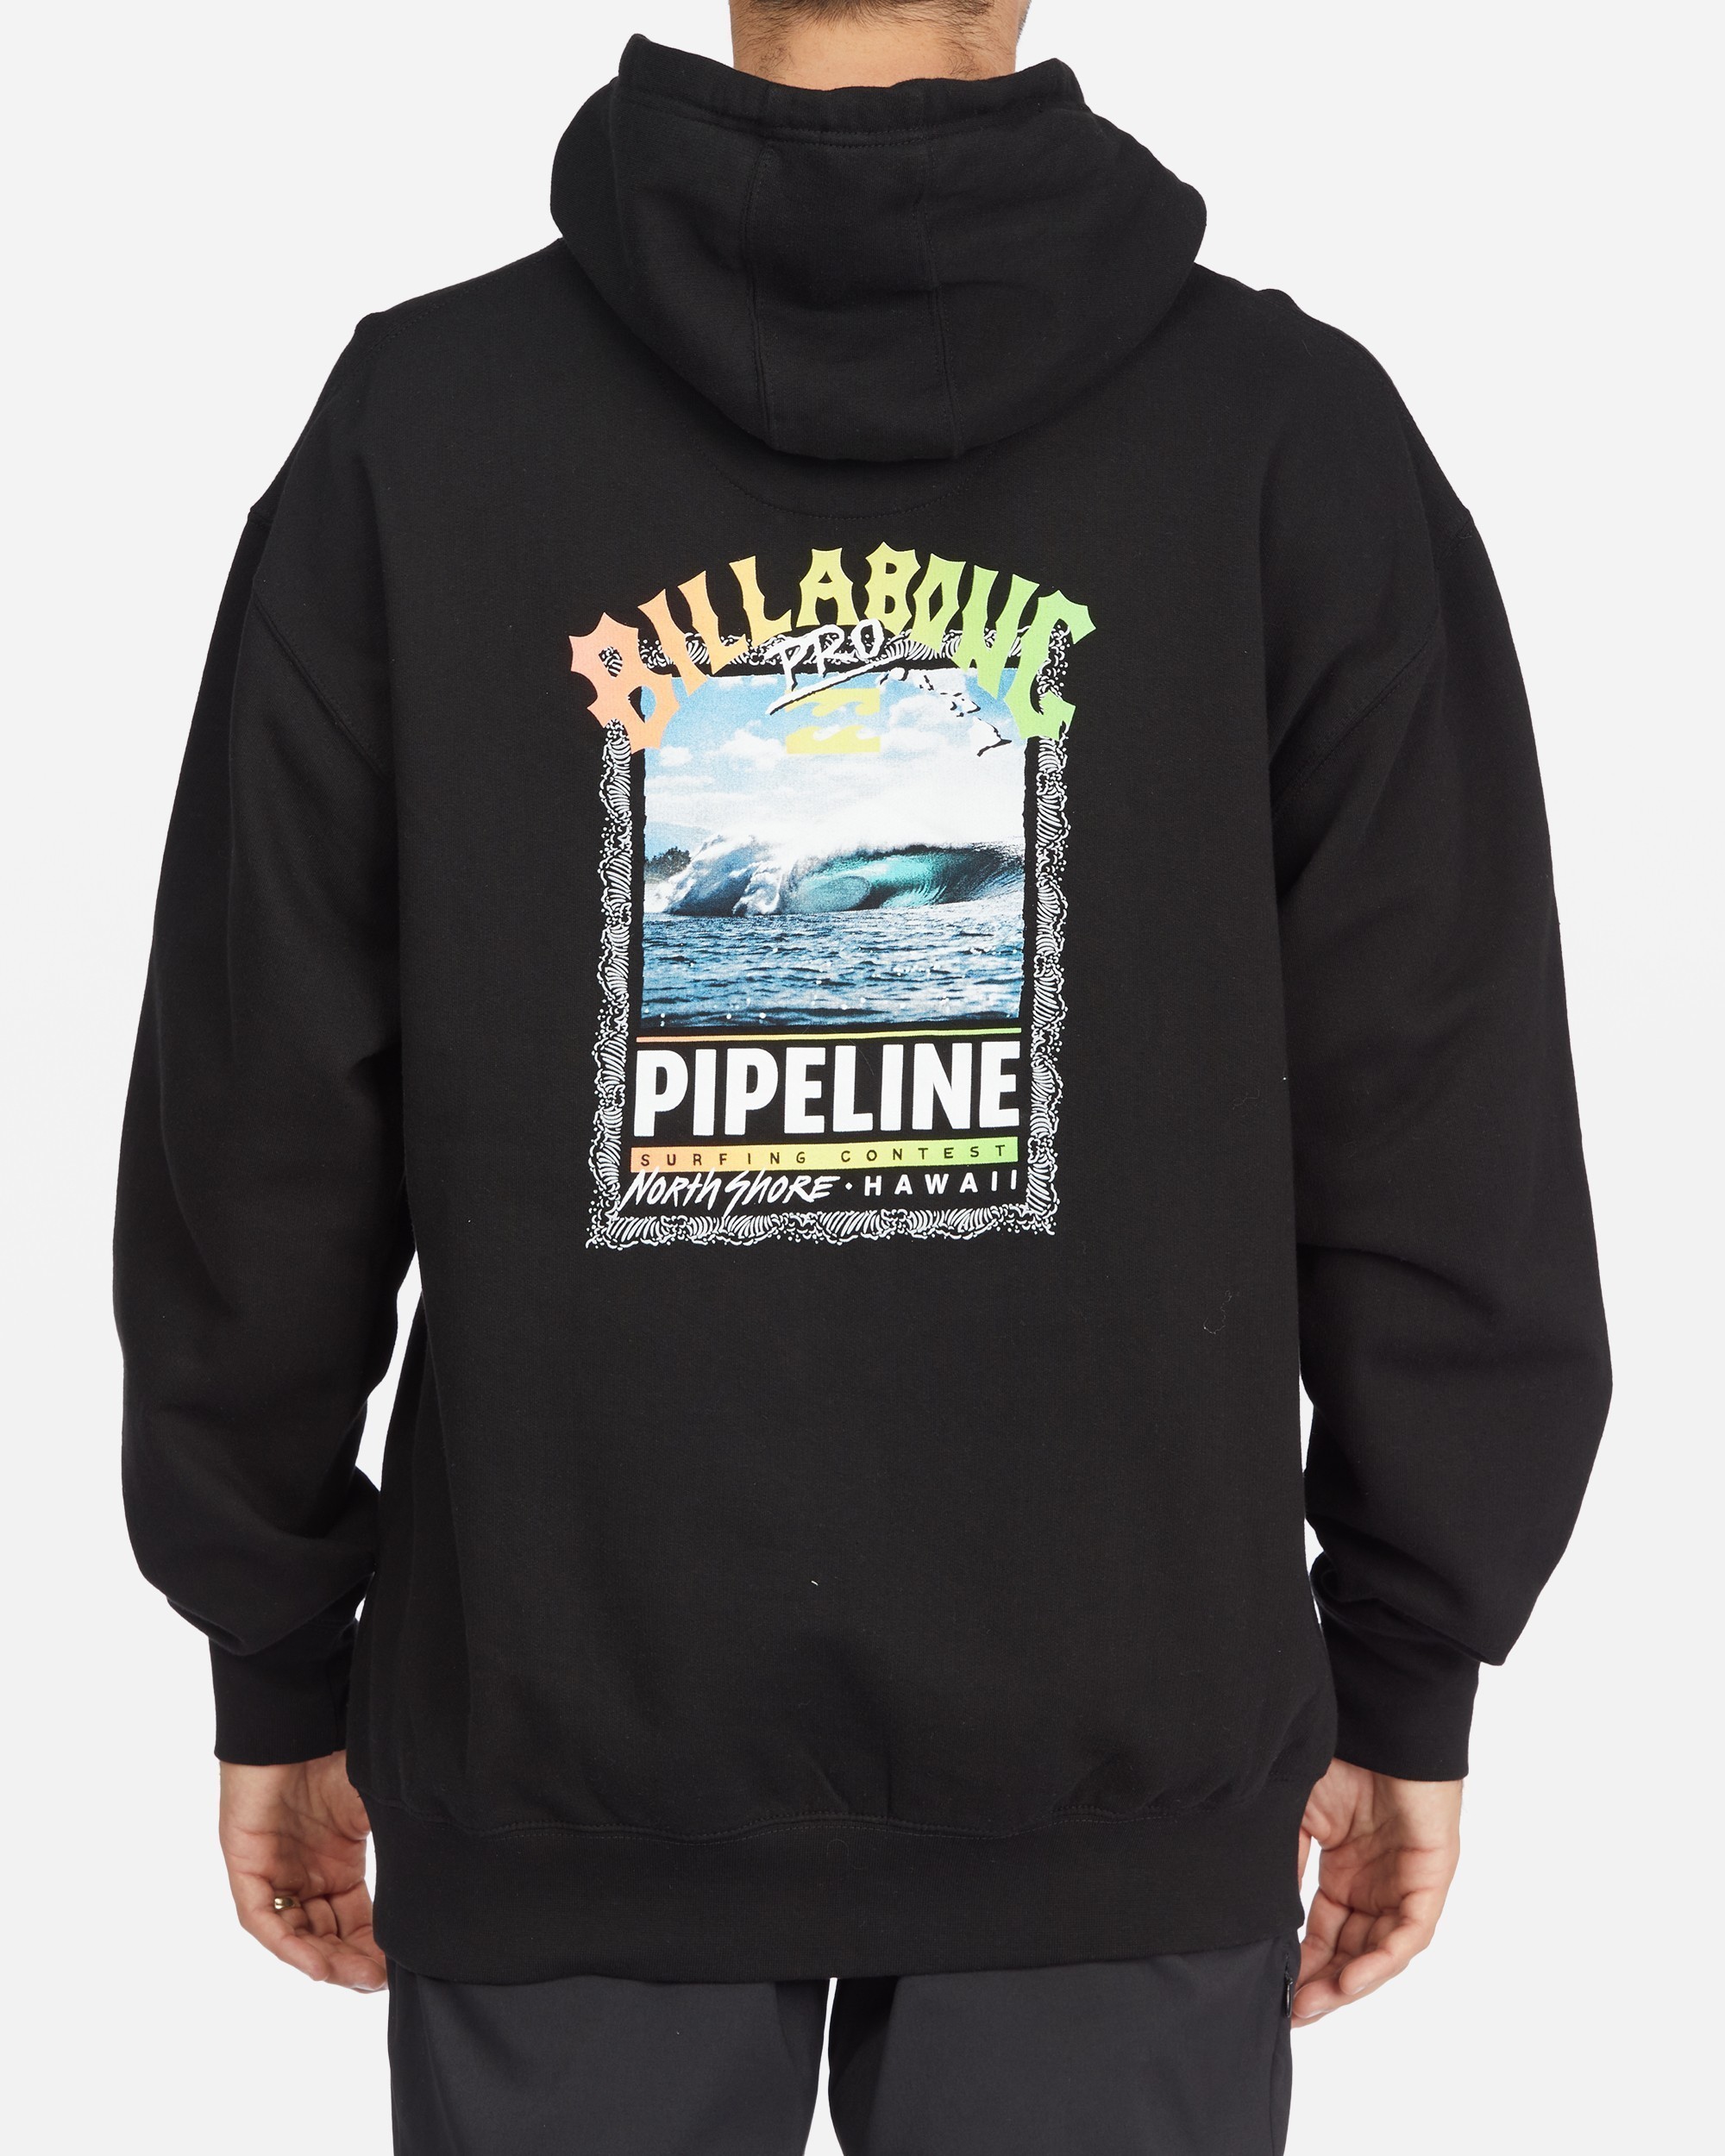 Pipeline Poster Pullover Hoodie